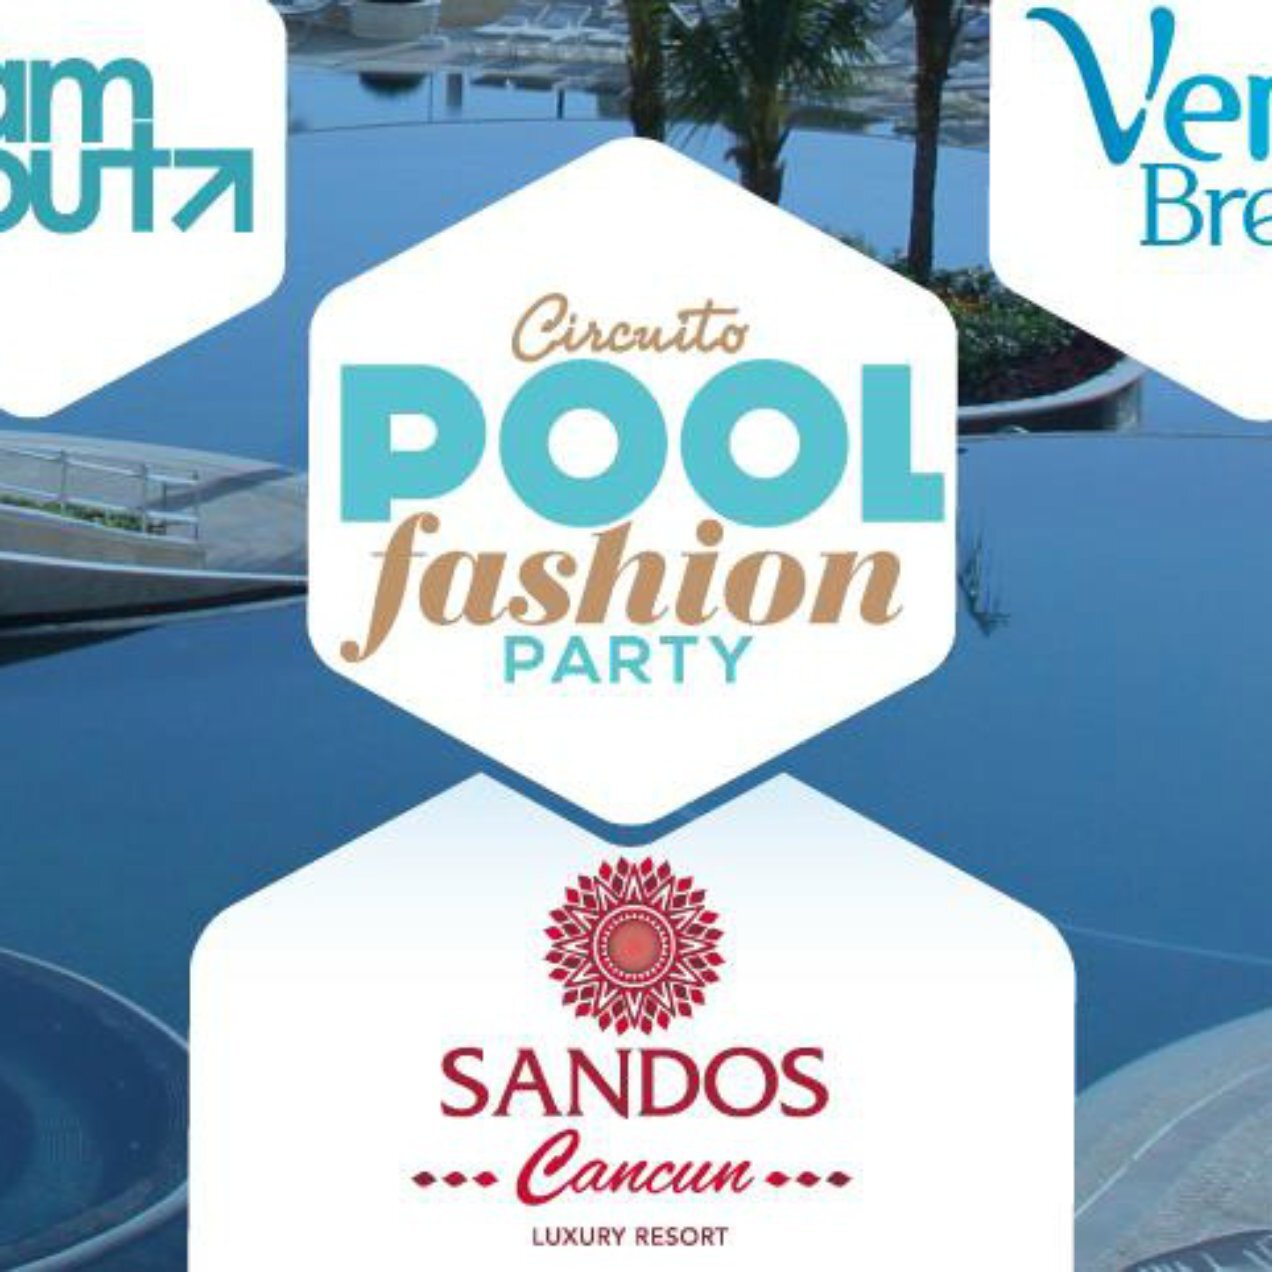 Glam Out Pool Fashion Party llega a Sandos Cancún